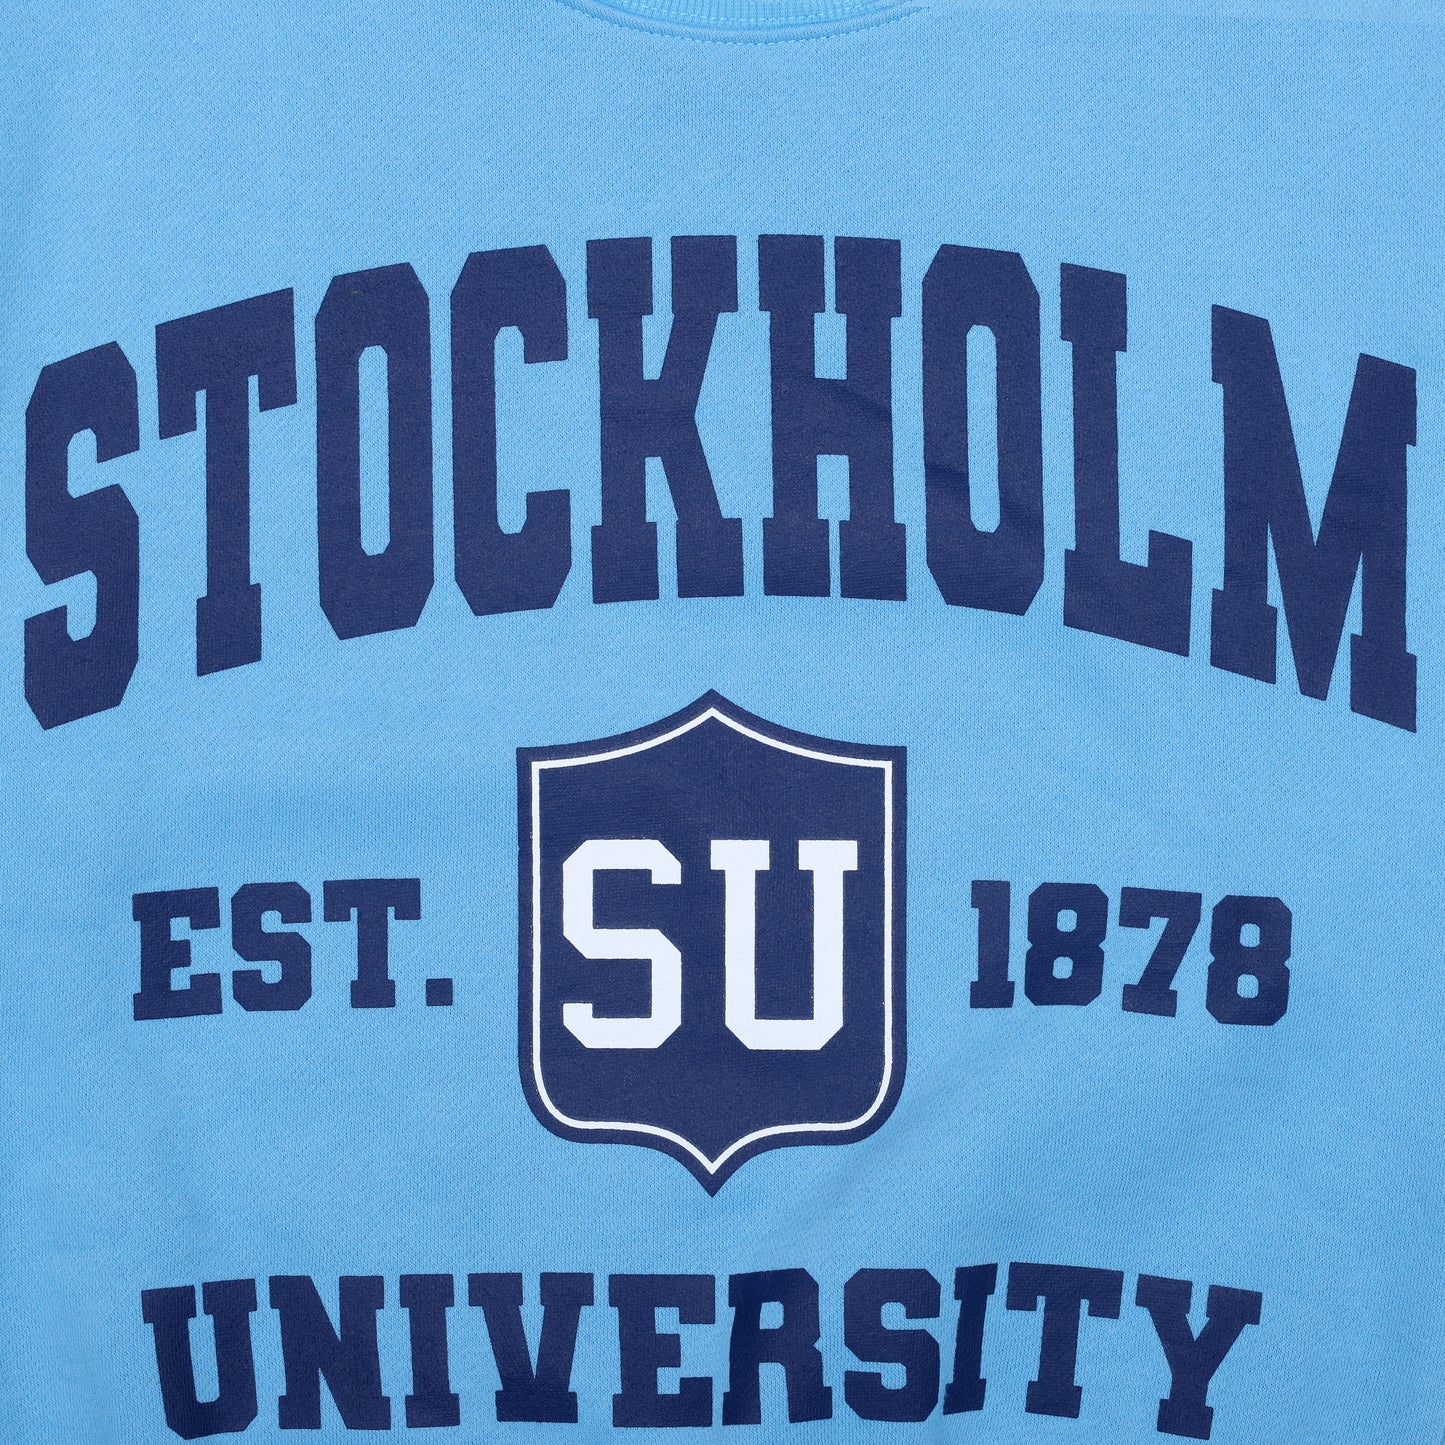 Stockholm Sweatshirt